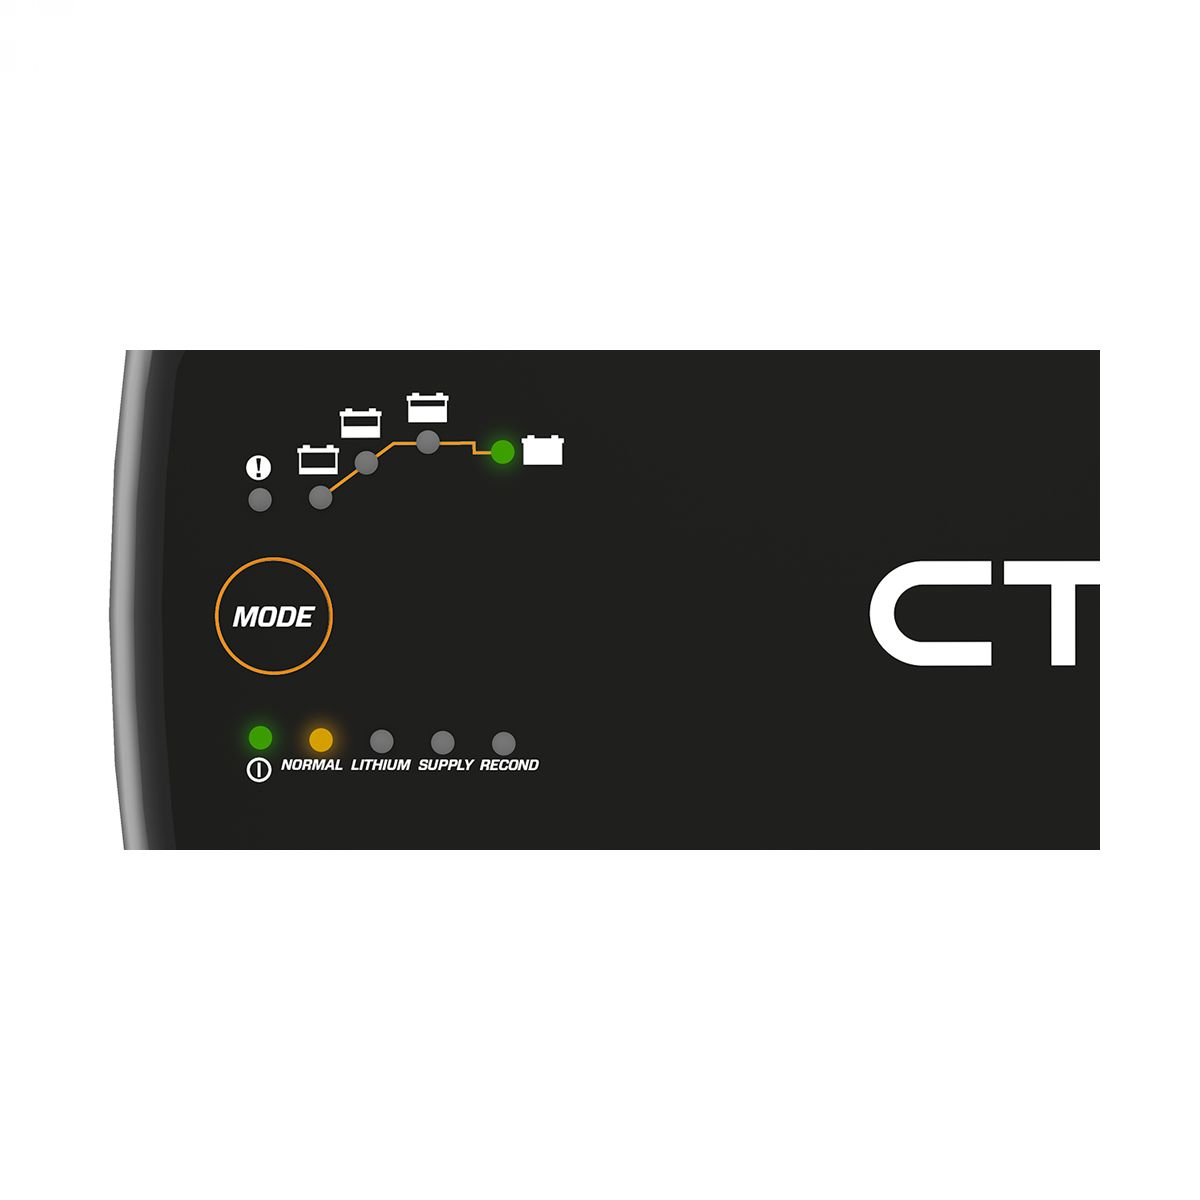 CTEK PRO 25S punjač akumulatora za 12V AGM GEL Lithium